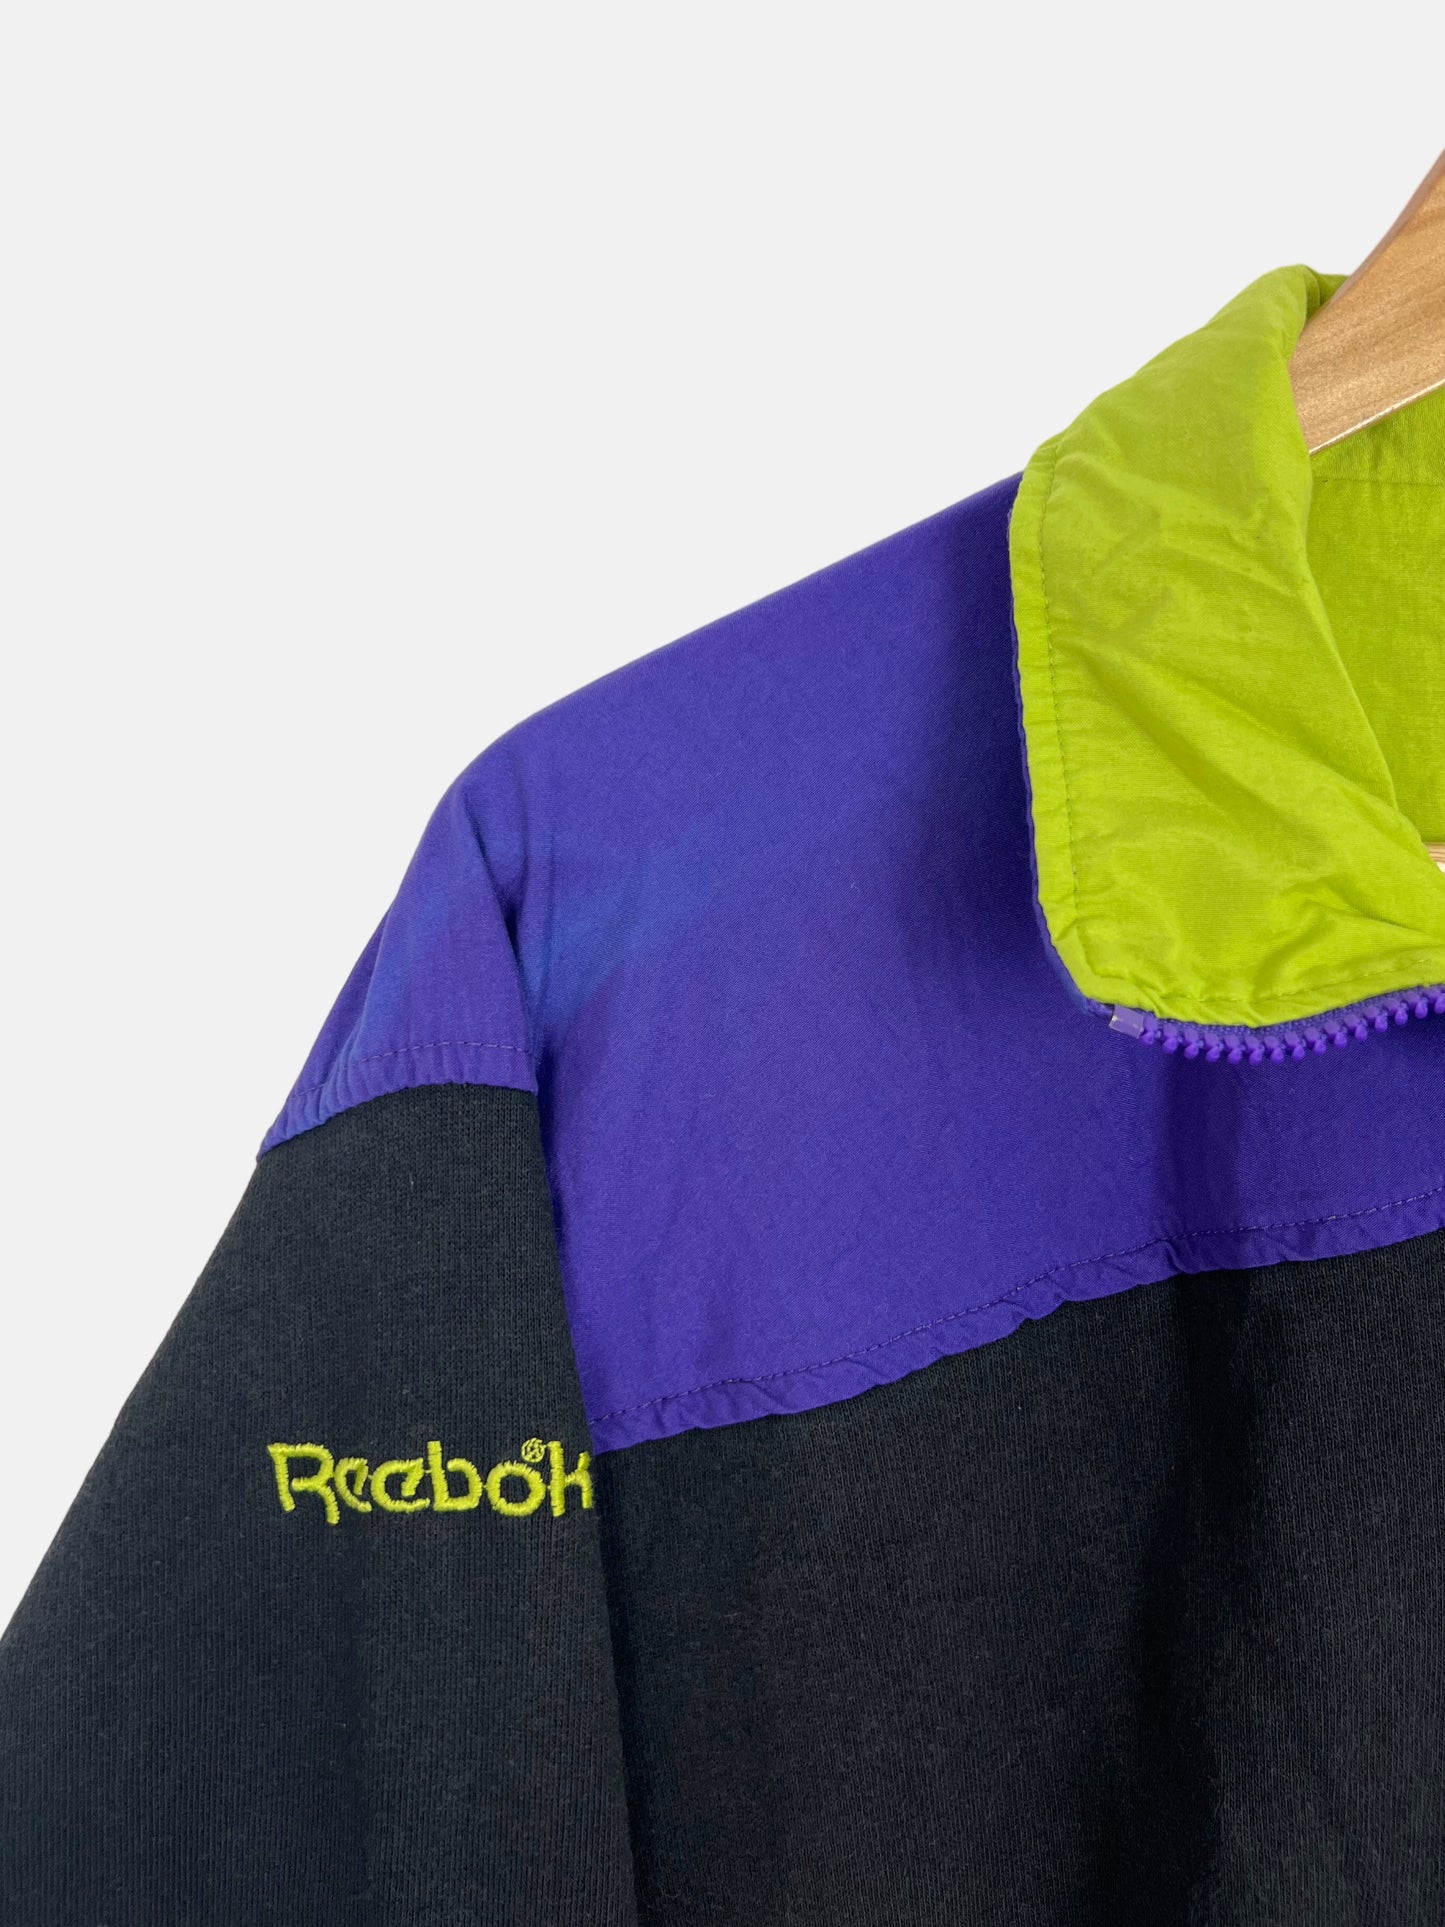 90's Reebok 'Get The Feeling' Embroidered Vintage Quarterzip Sweatshirt Size 8